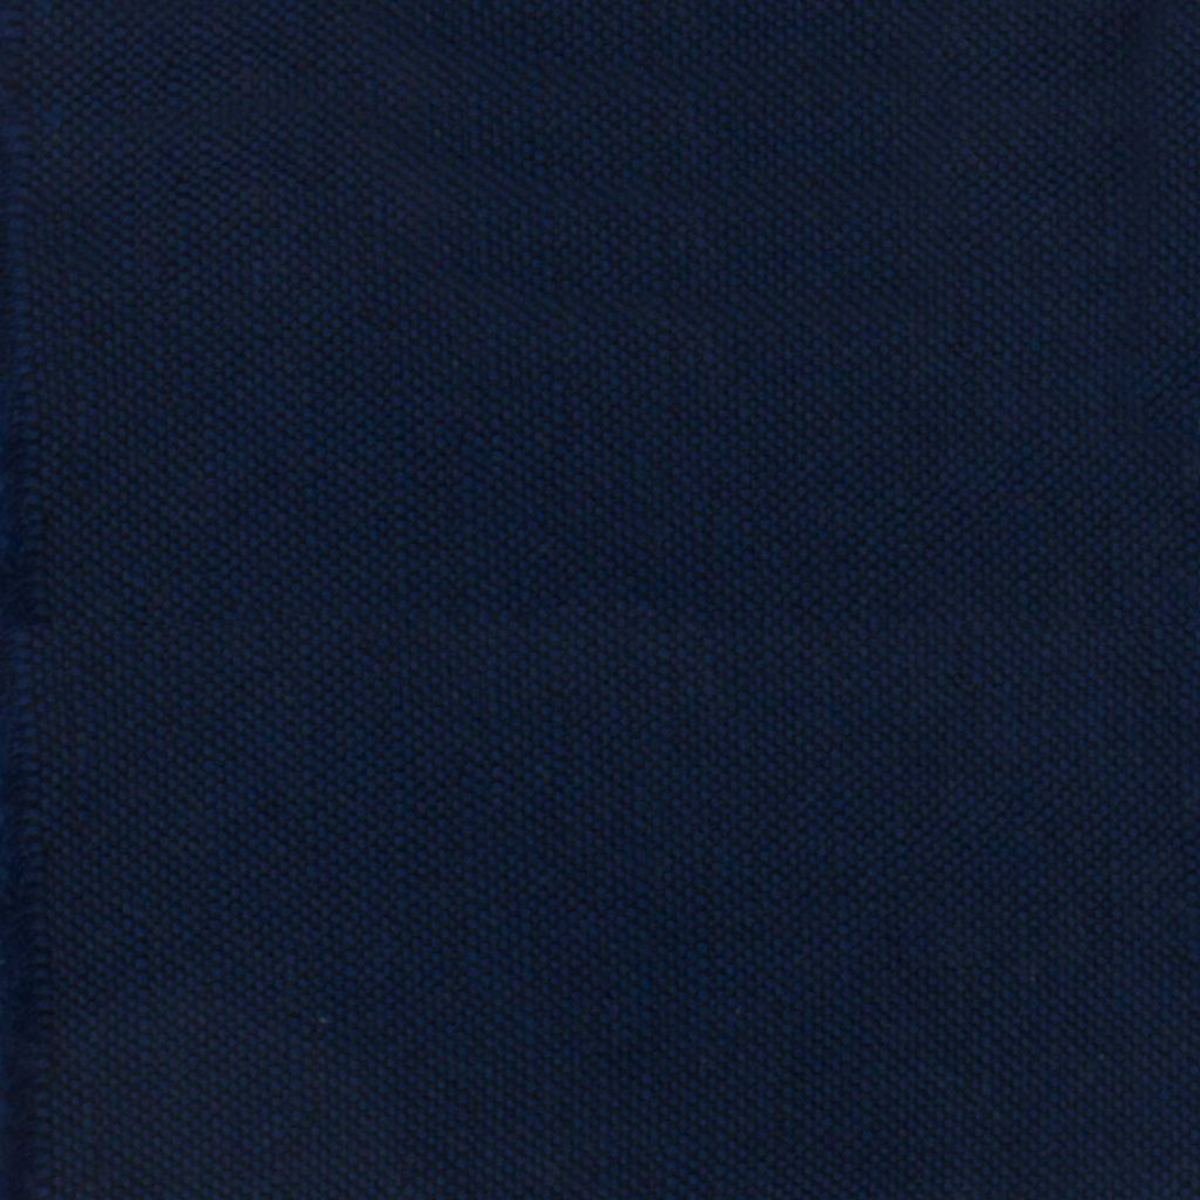 linen indigo cushion for croquet teak recliner thumbnail image